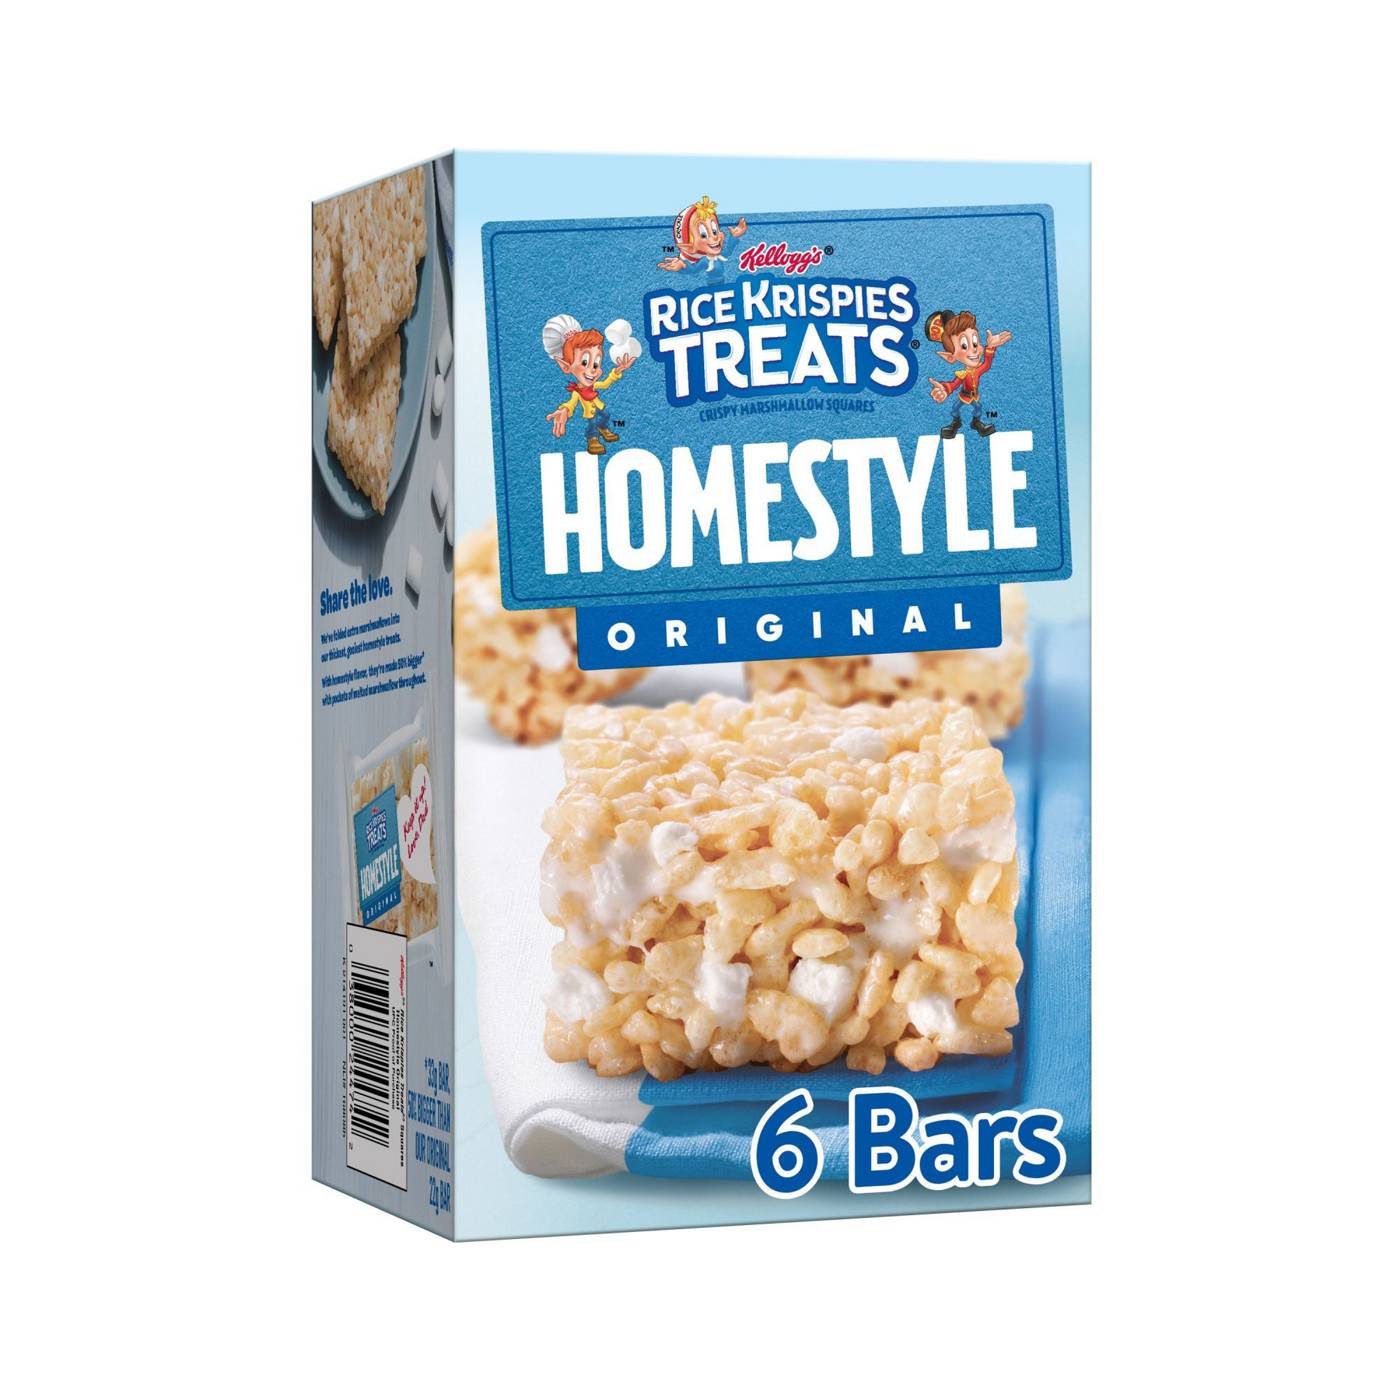 Rice Krispies Treats Homestyle Original Crispy Marshmallow Squares; image 1 of 5